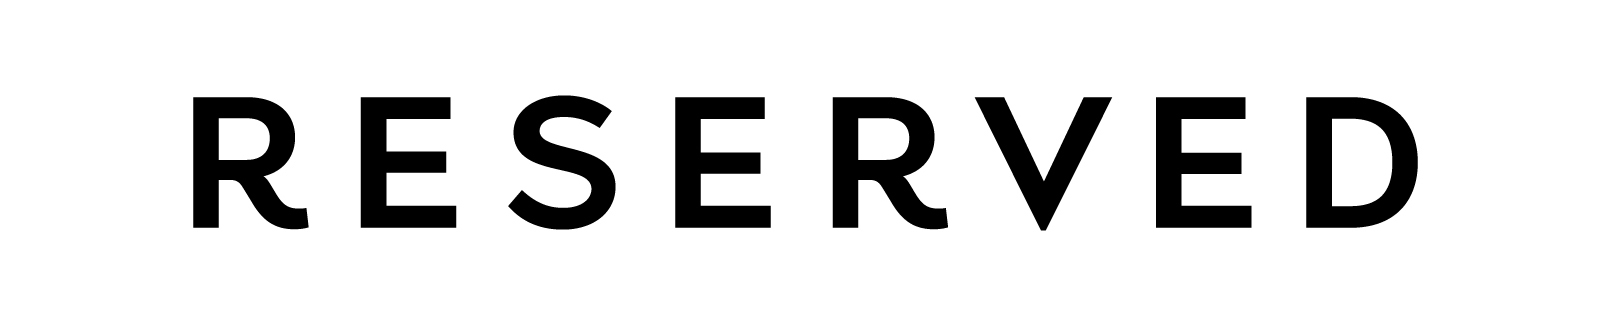 Reserved - logo